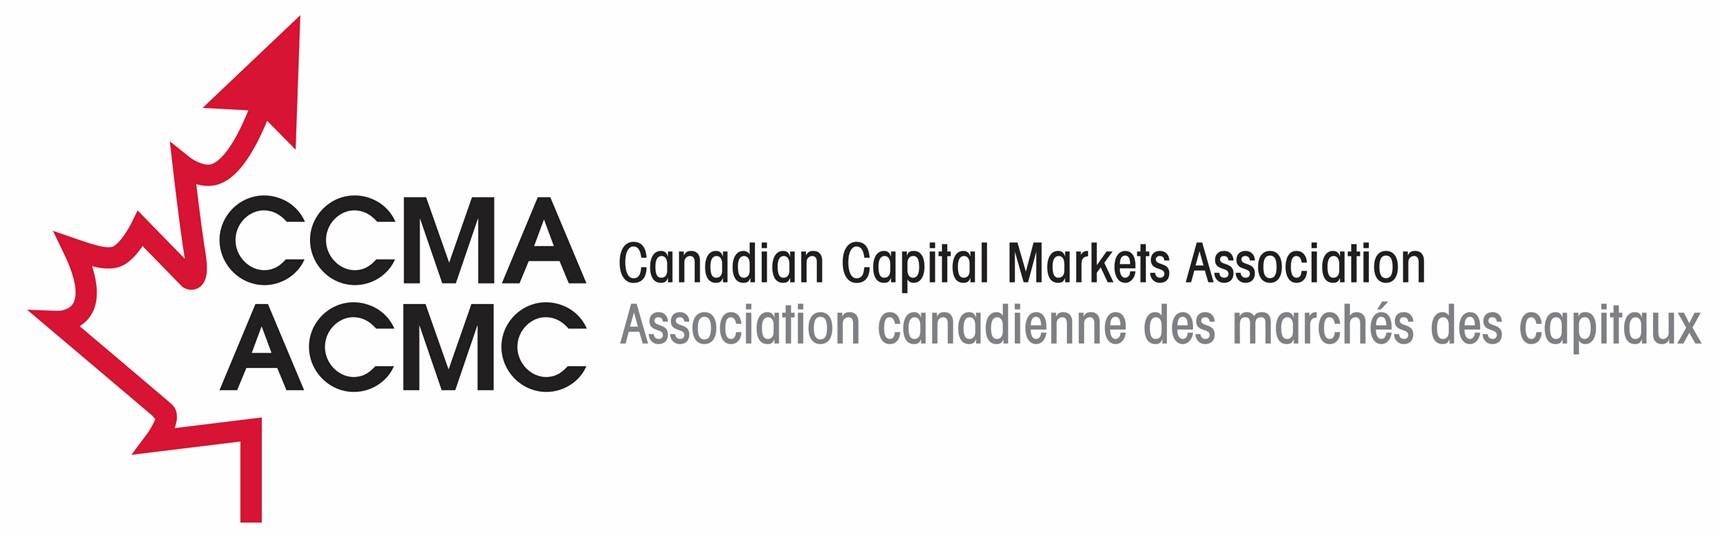 Canadian Capital Markets Association (CCMA)